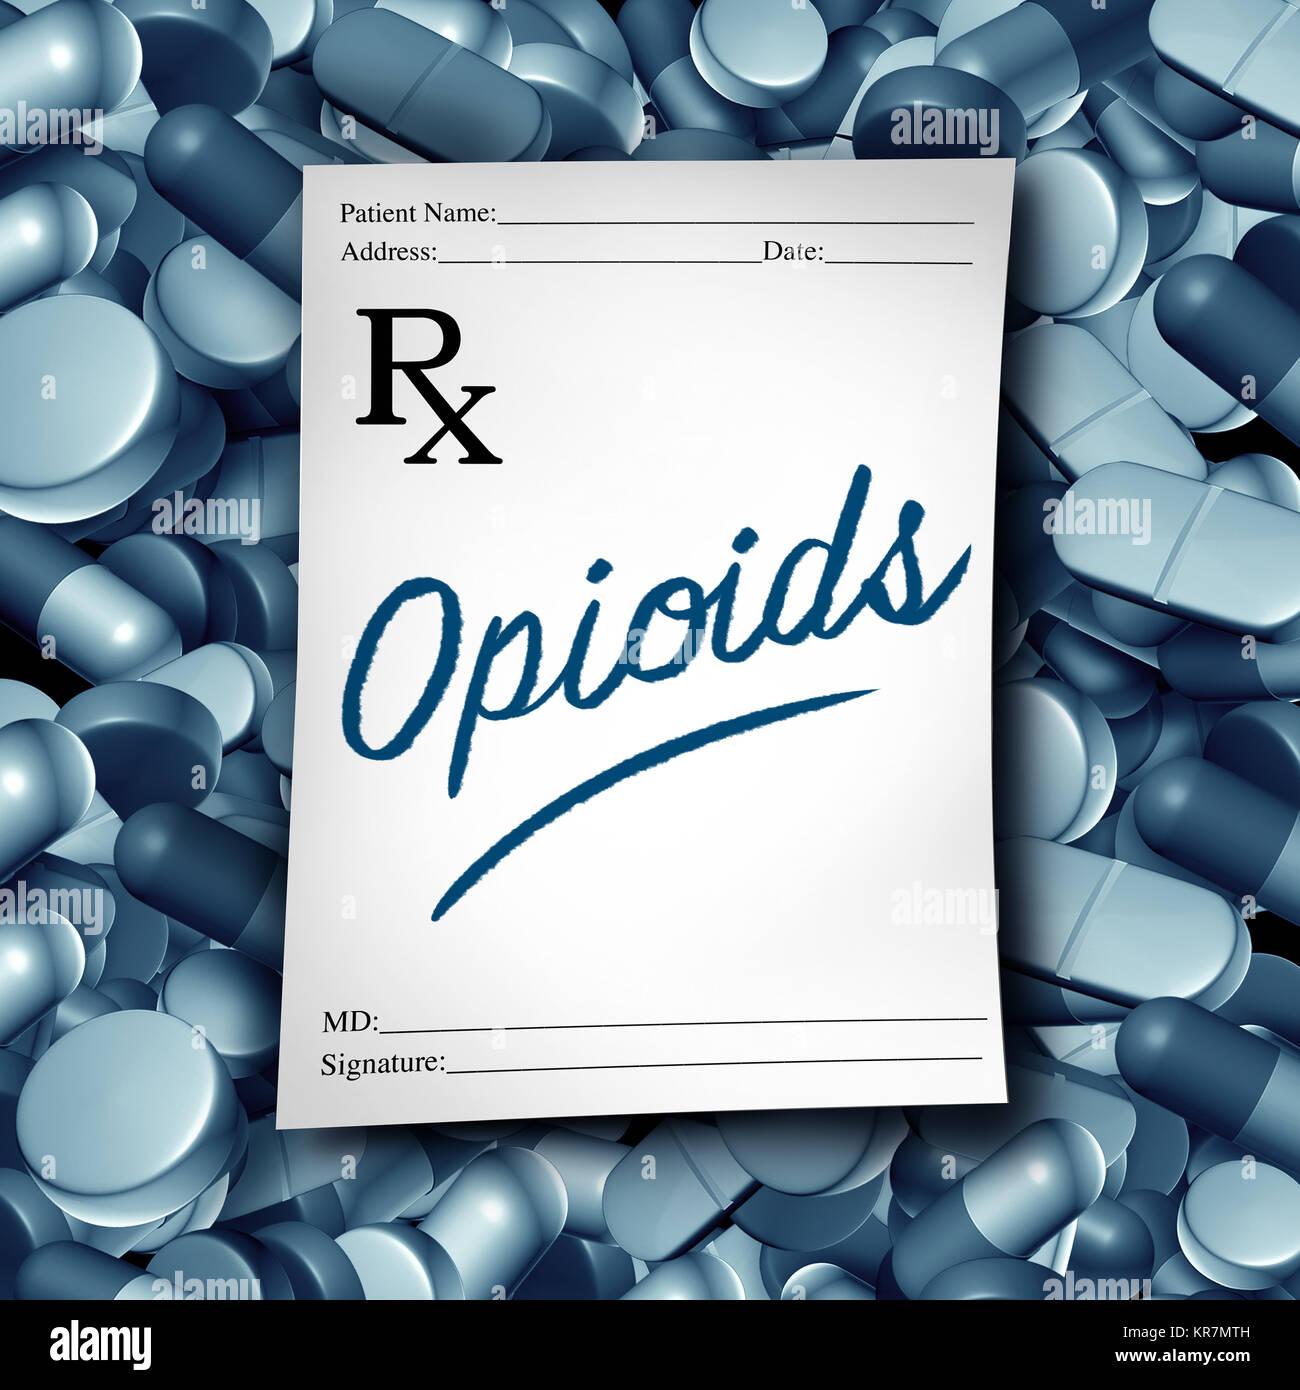 Opioids doctor prescription and opioid health risk medical pills crisis as a prescribed medication painkiller addiction epidemic concept. Stock Photo